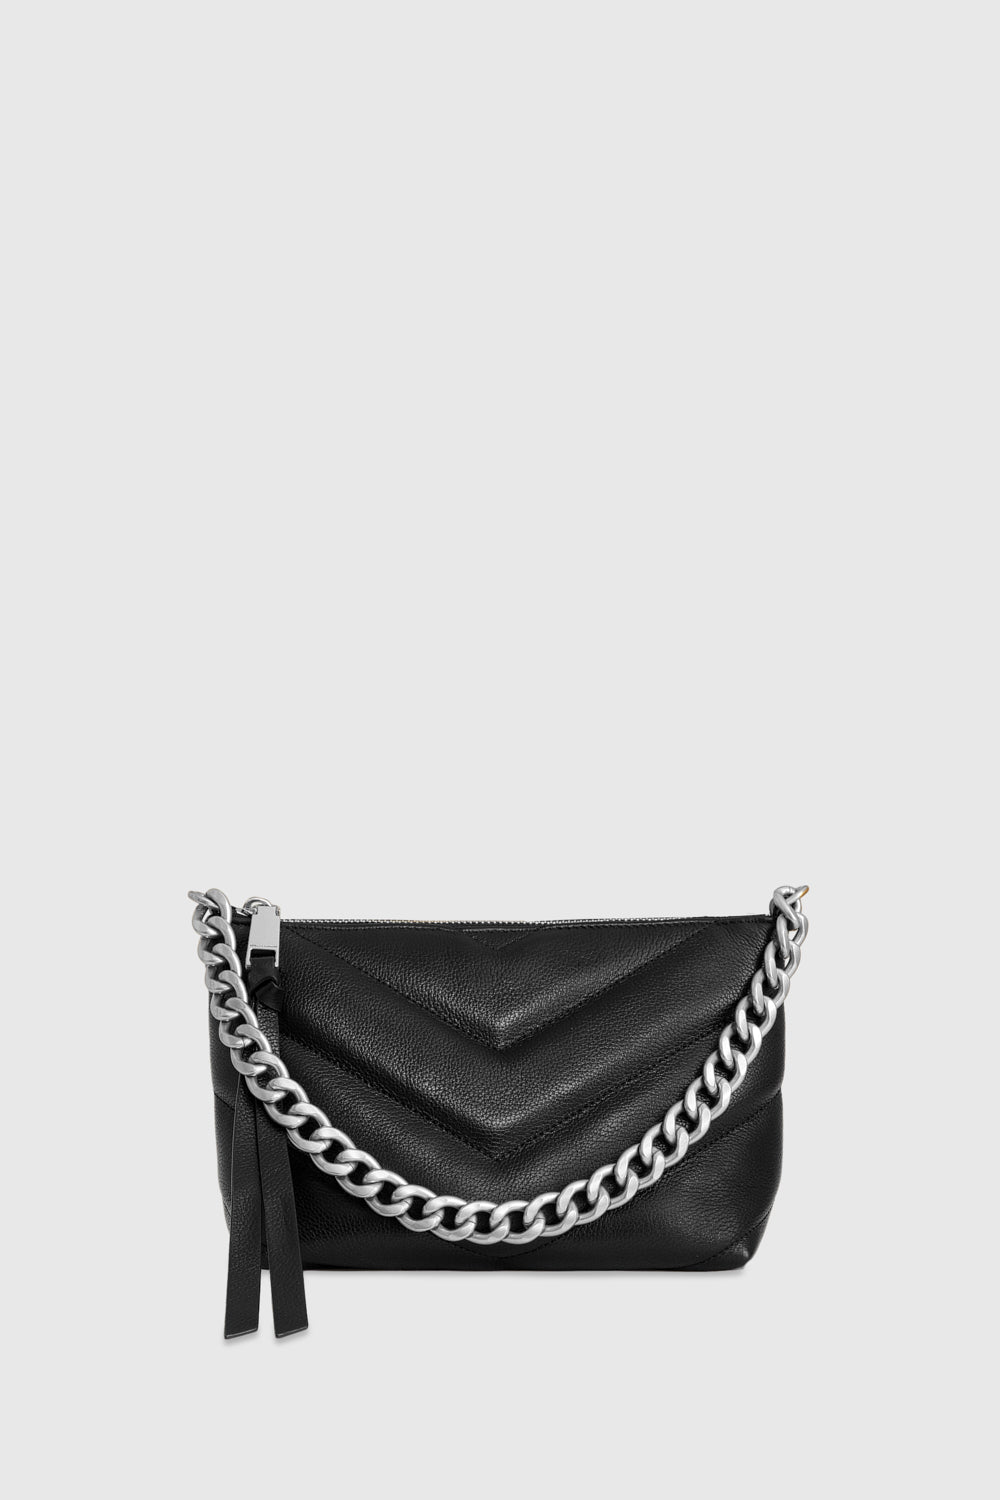 Accessorize London Eddie Croc Cross Body Women's Sling Bag (Black)